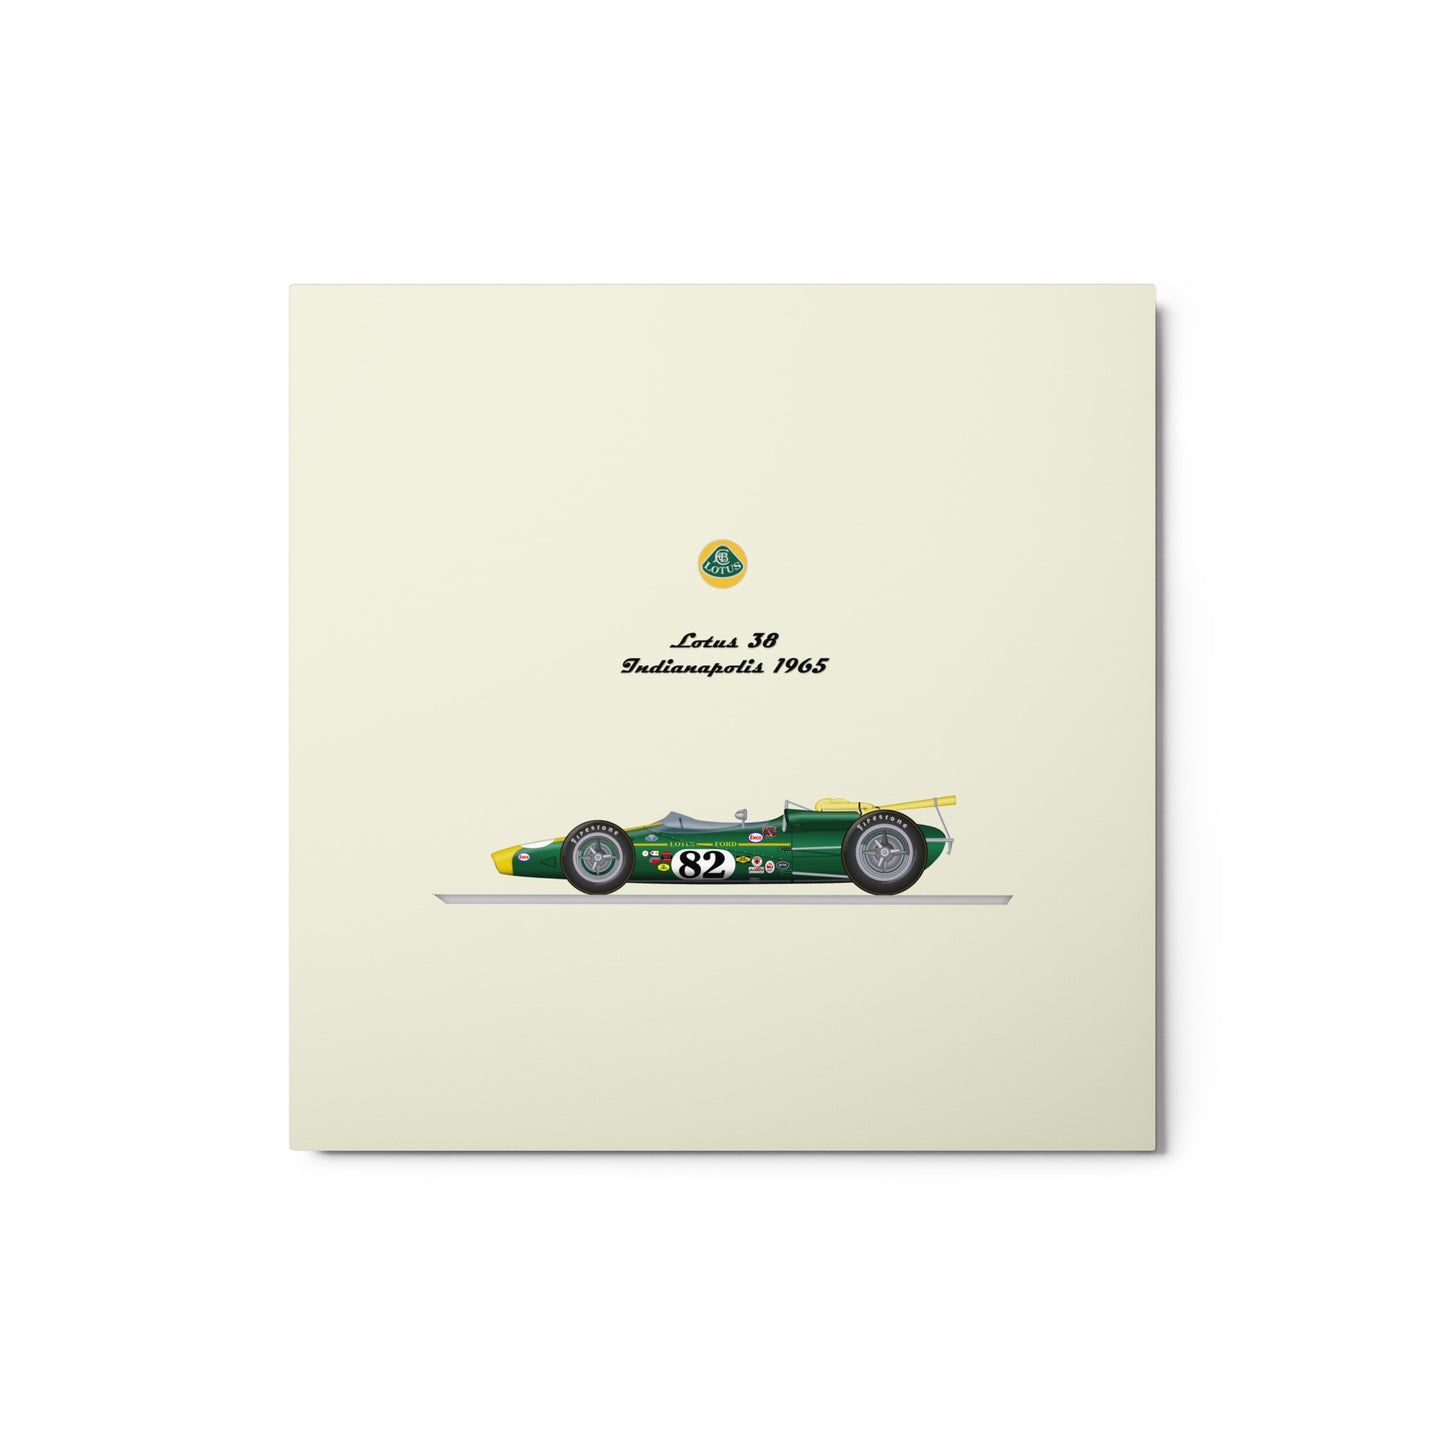 Car-Indycar-1965 Lotus 38 By Gianfranco Lanini